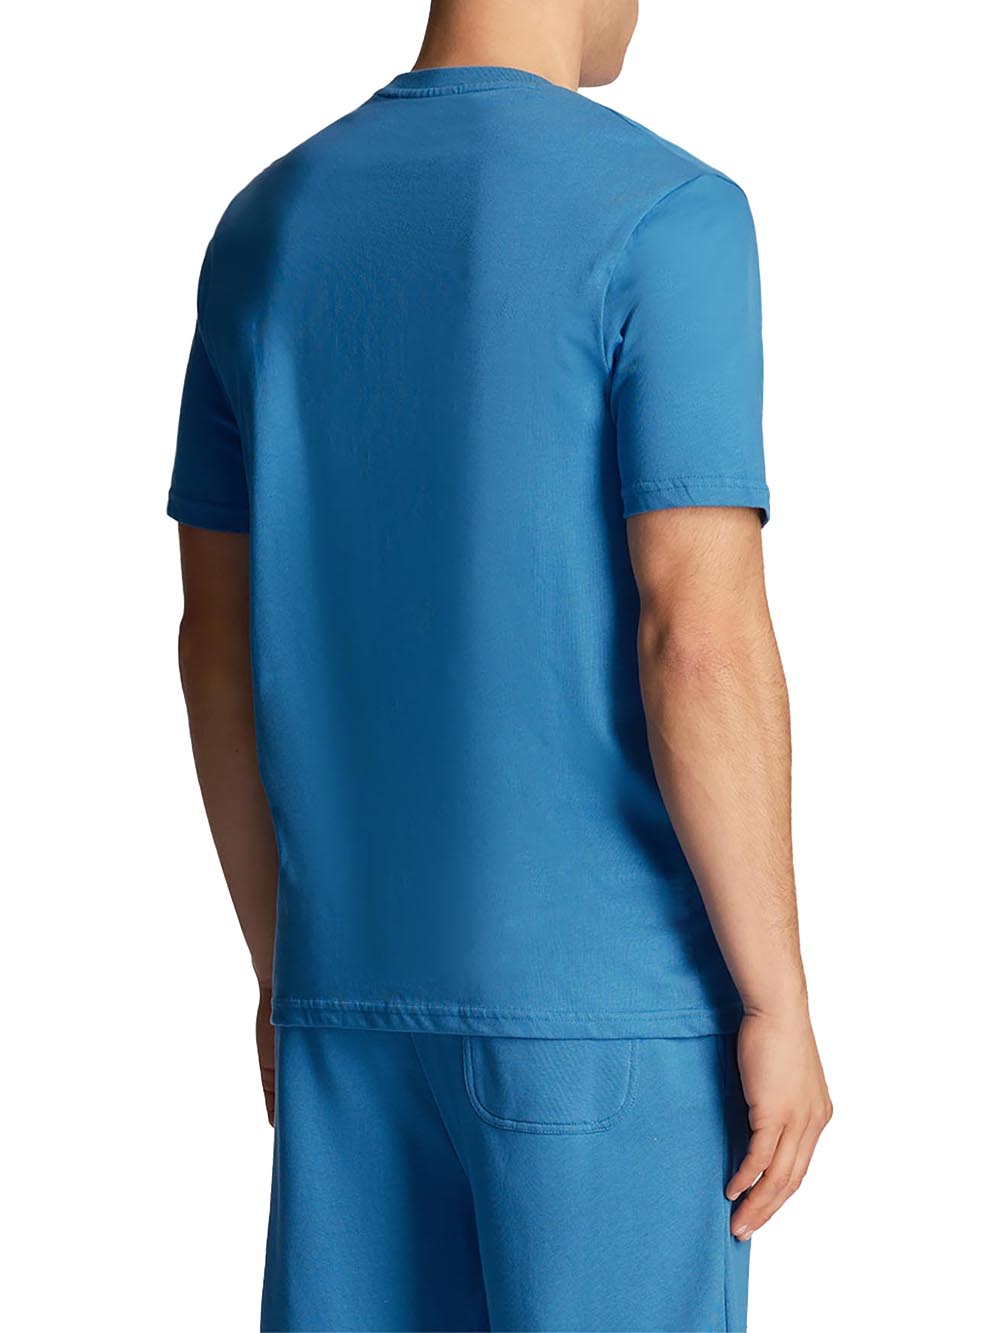 Lyle & Scott T-shirt Uomo Ts400vog Blu indaco